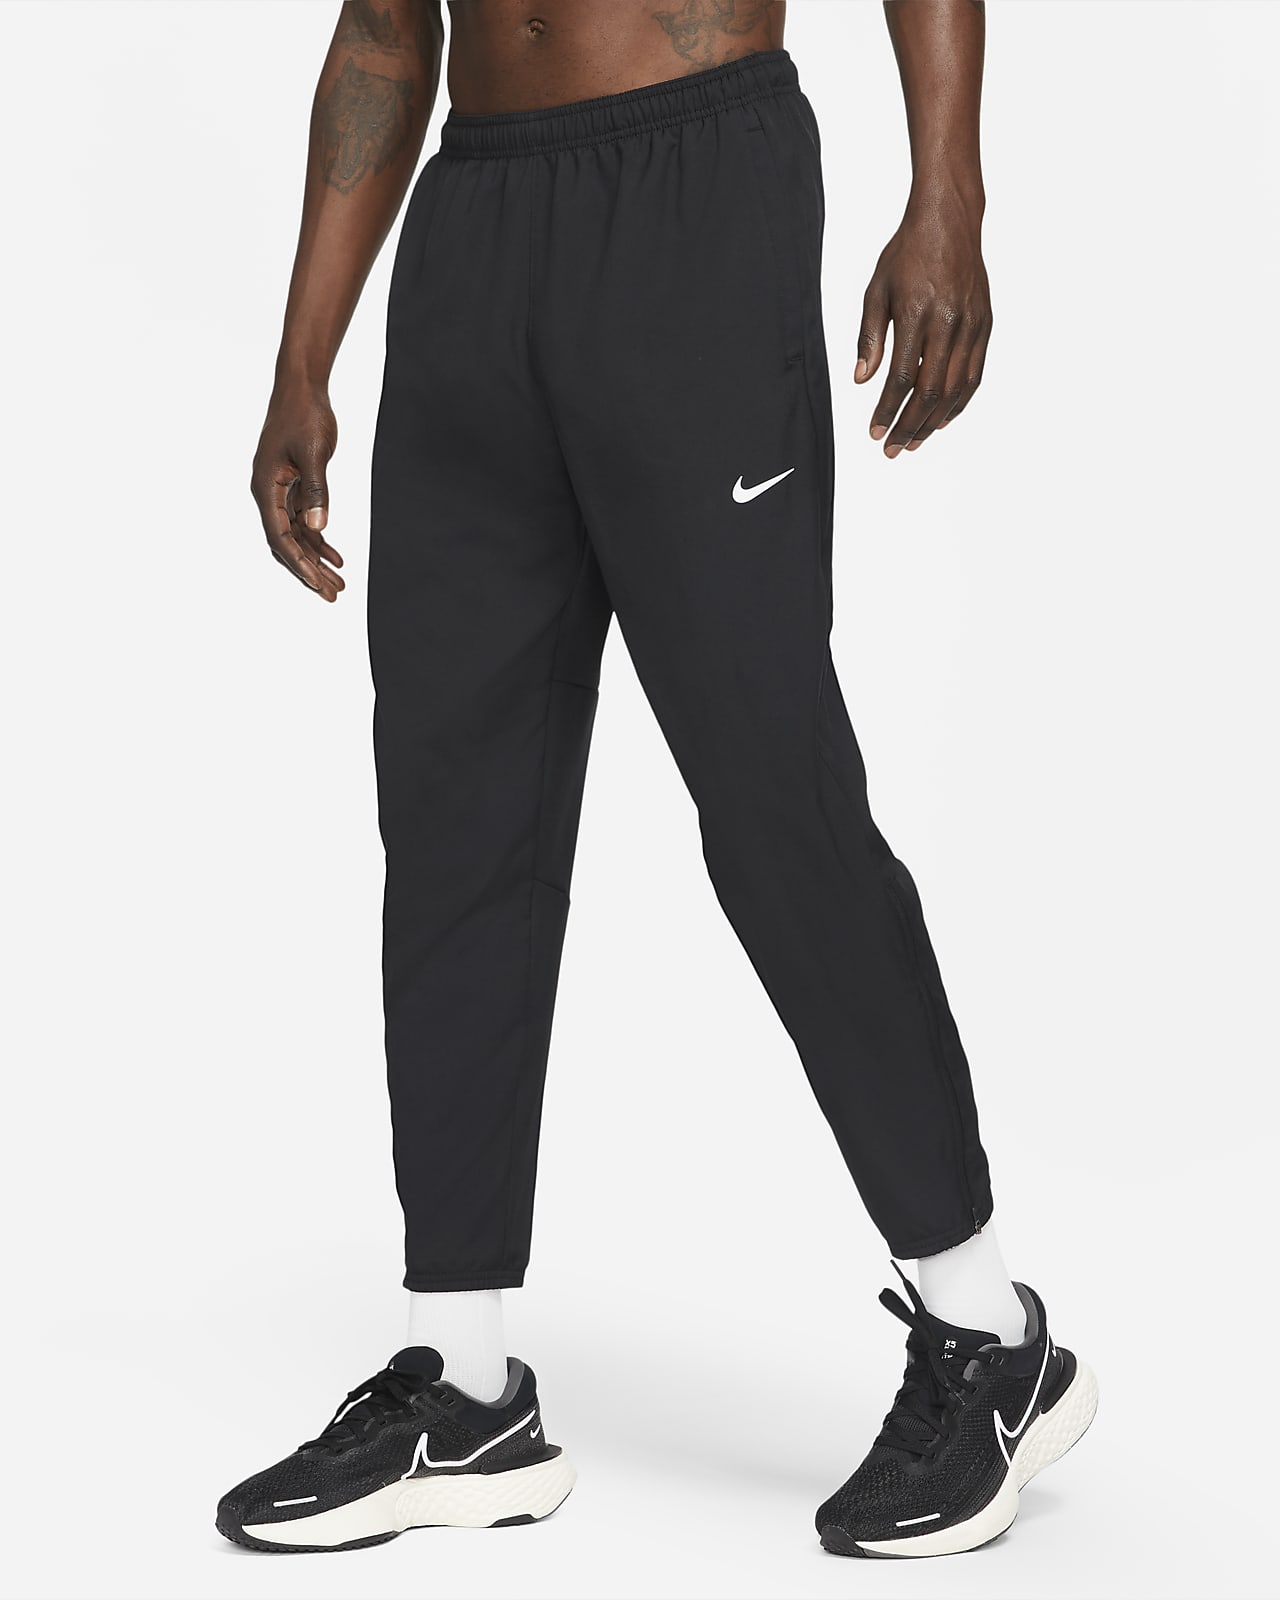 Nike Dri Fit Challenger Woven Pants L / Regular